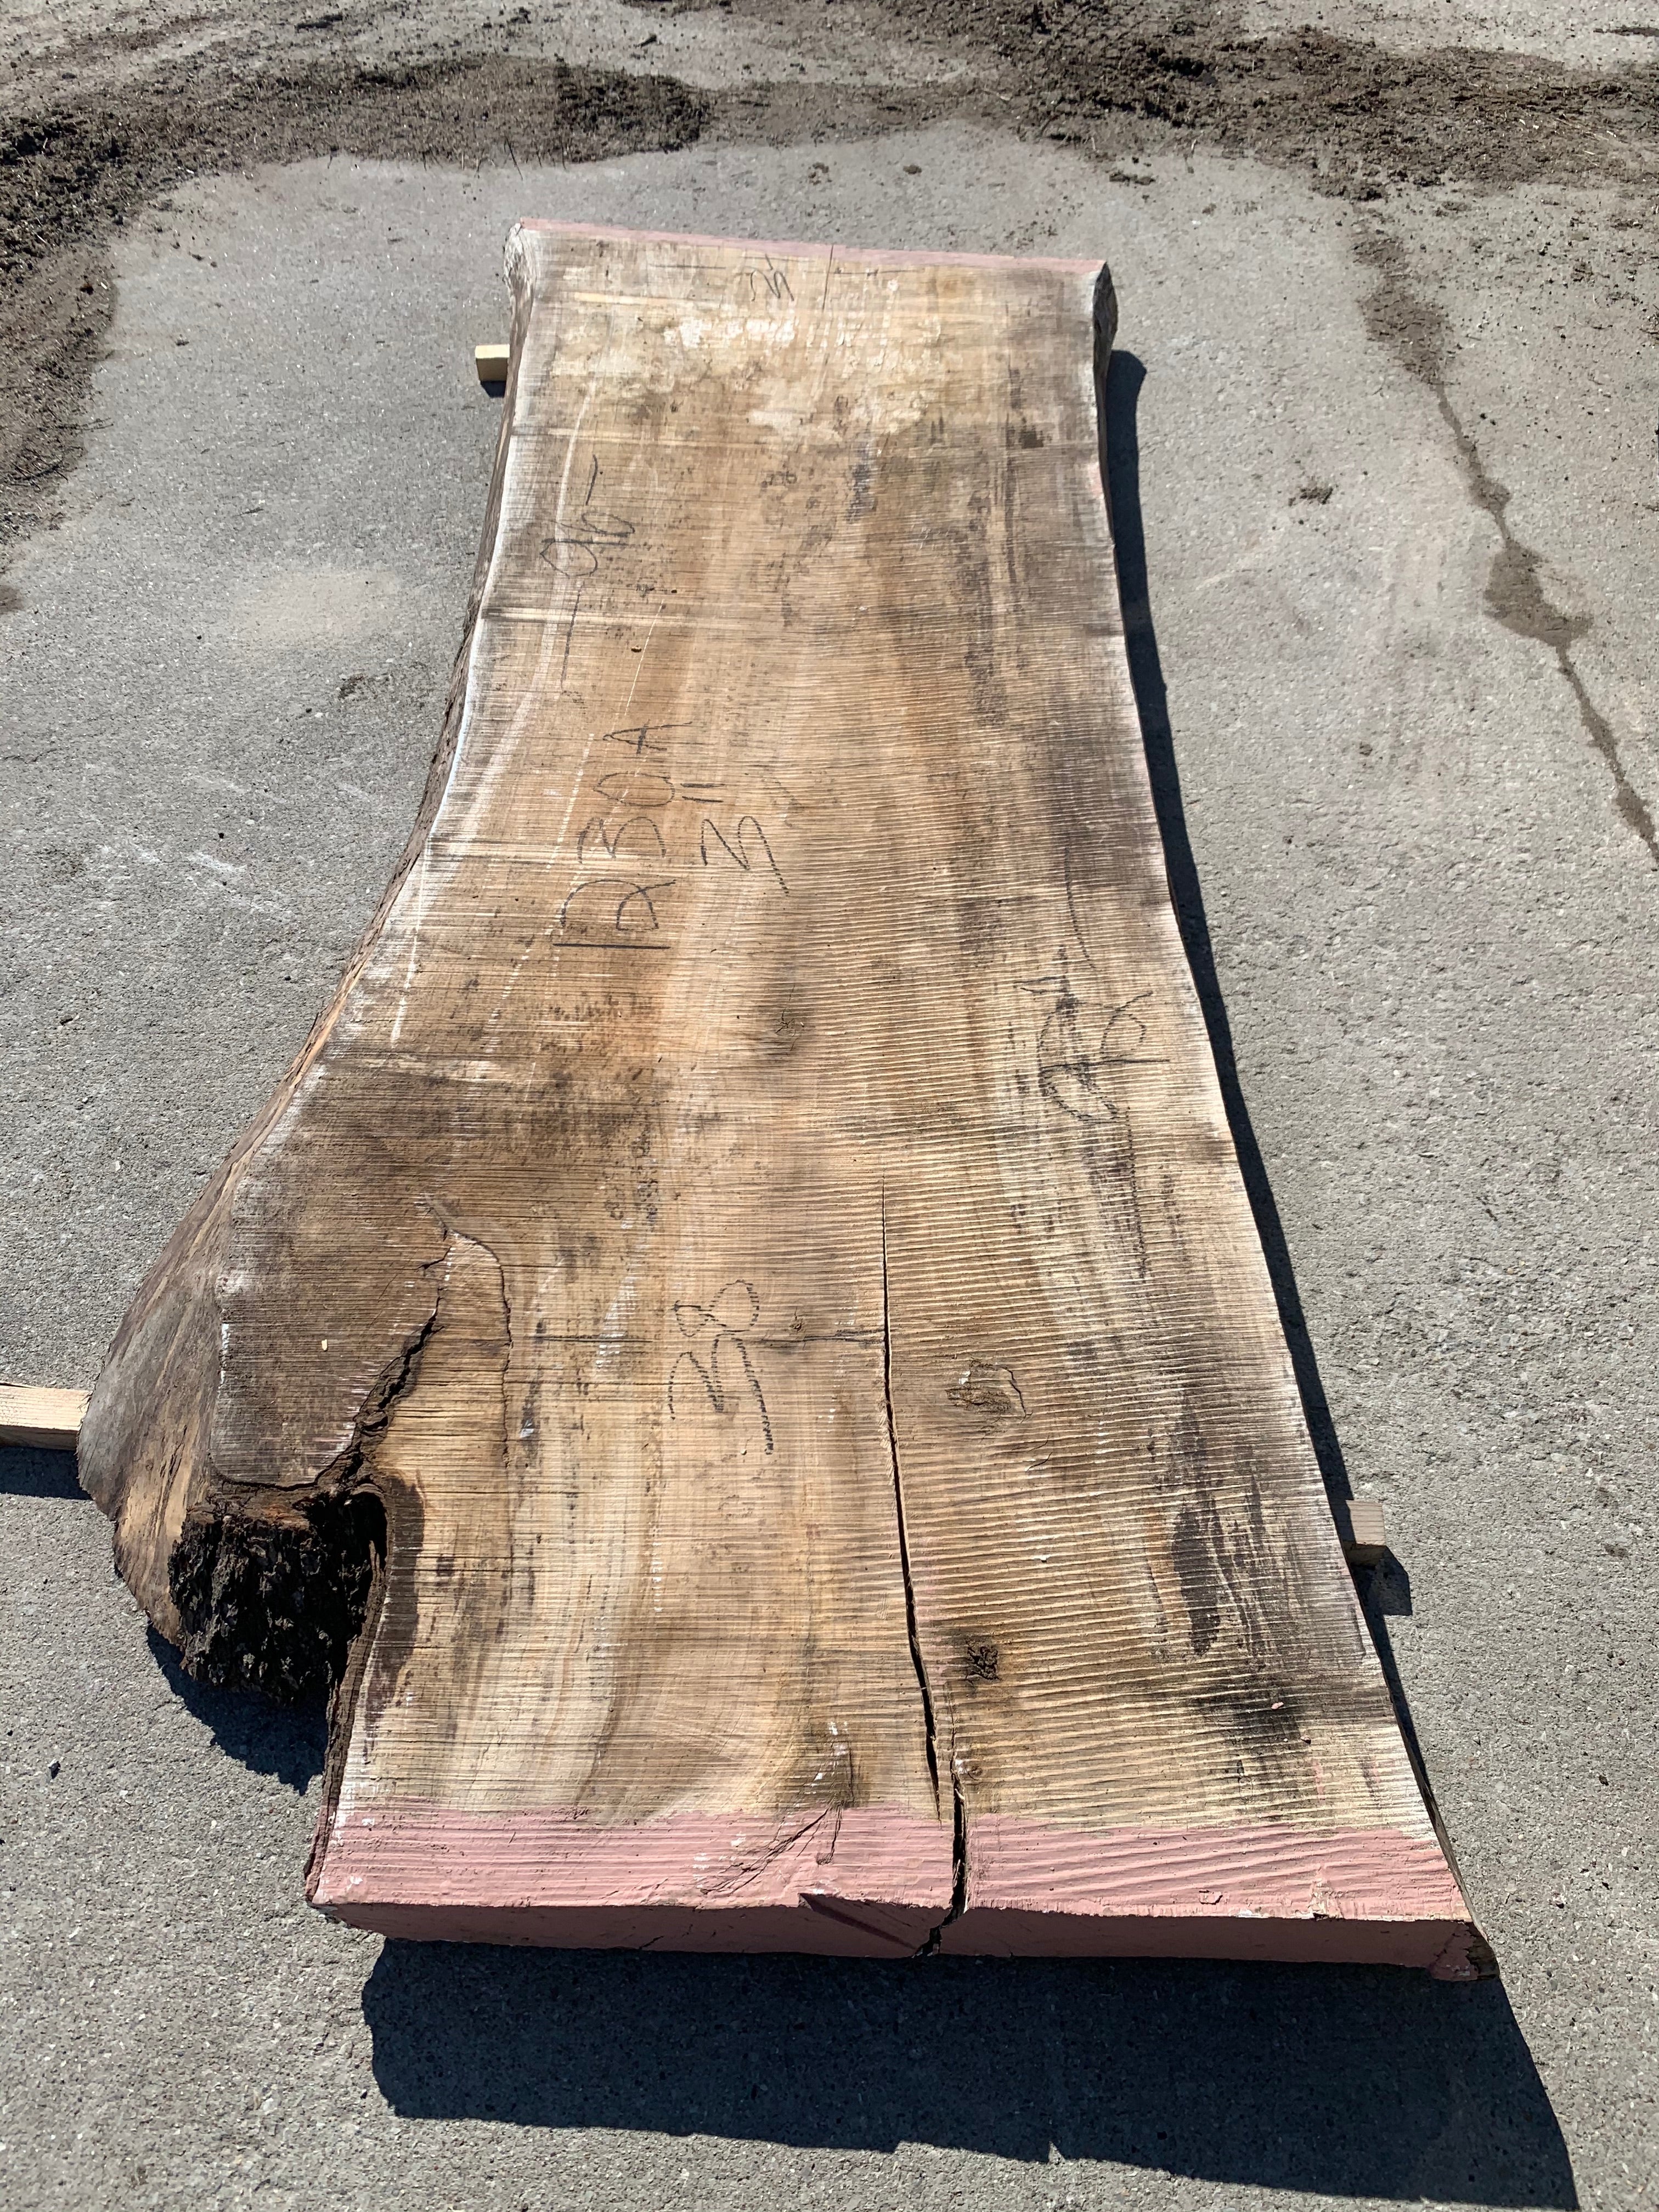 Spalted Soft Maple Slab #1230 Sawmill, mill, lumber, live edge slabs, mantles, floating shelves, wood, logs, log buyer